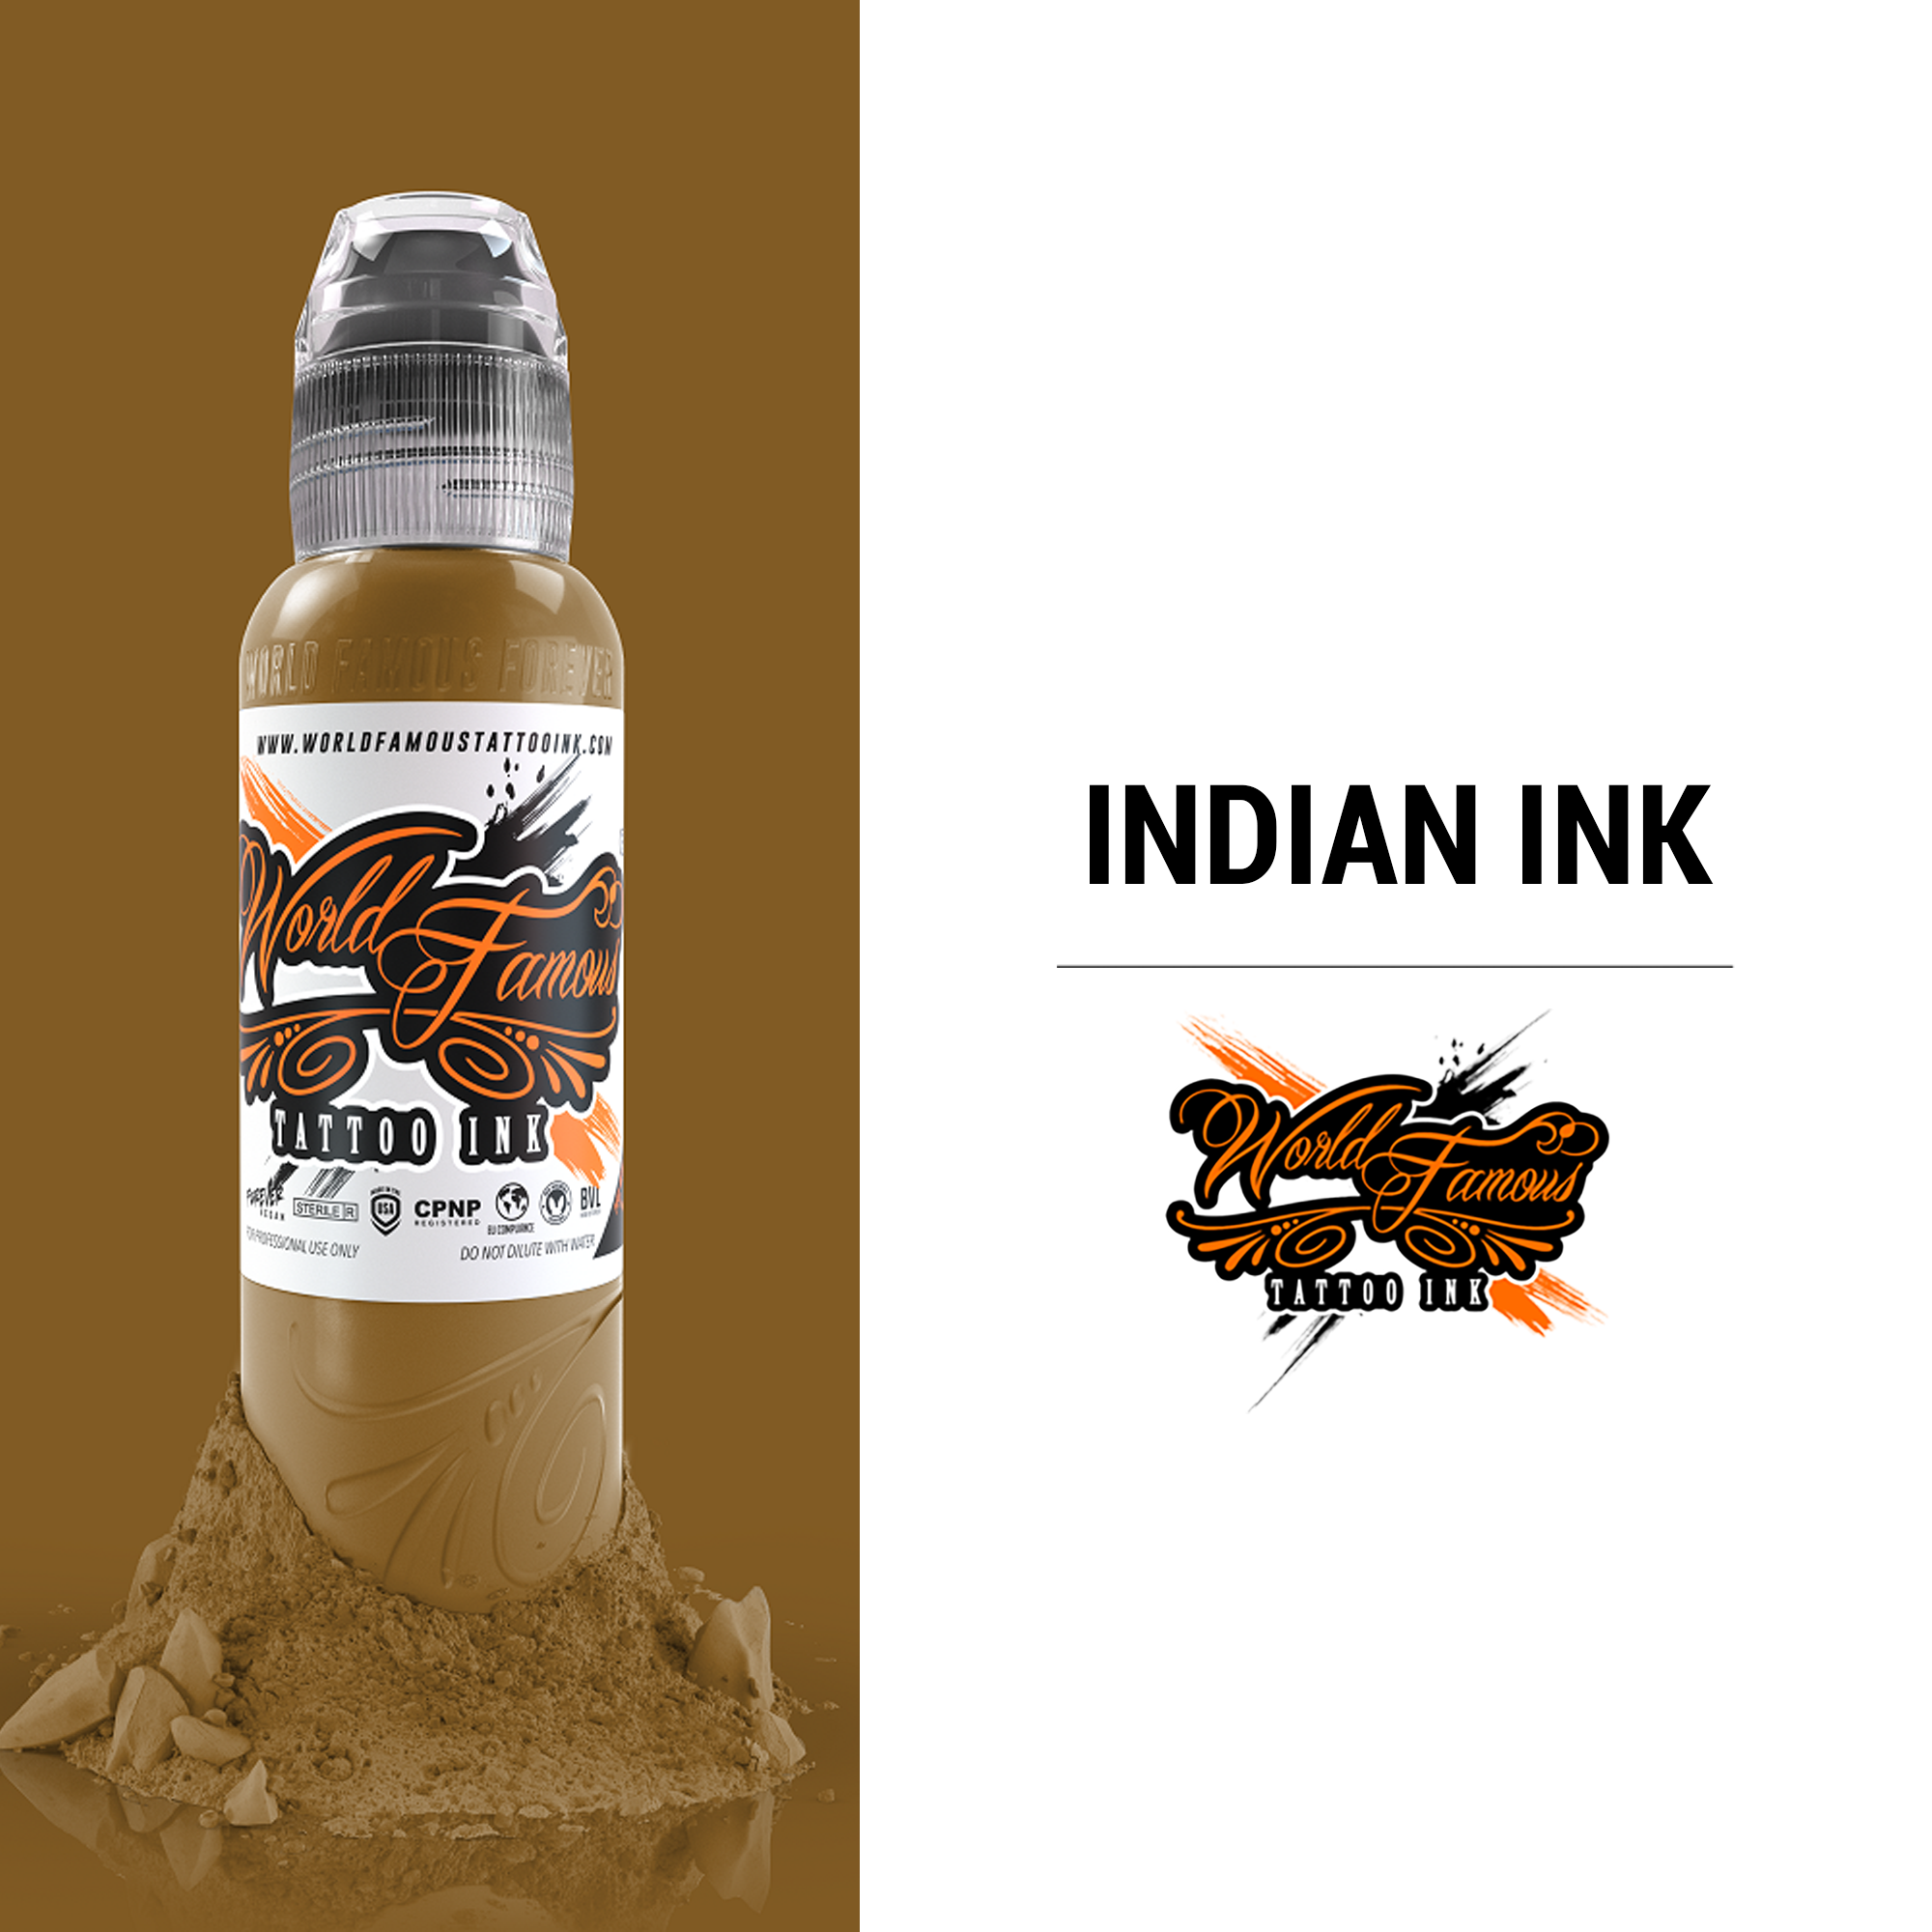 Indian ink  World Famous Tattoo Ink  Darklab Tattoo Supplies